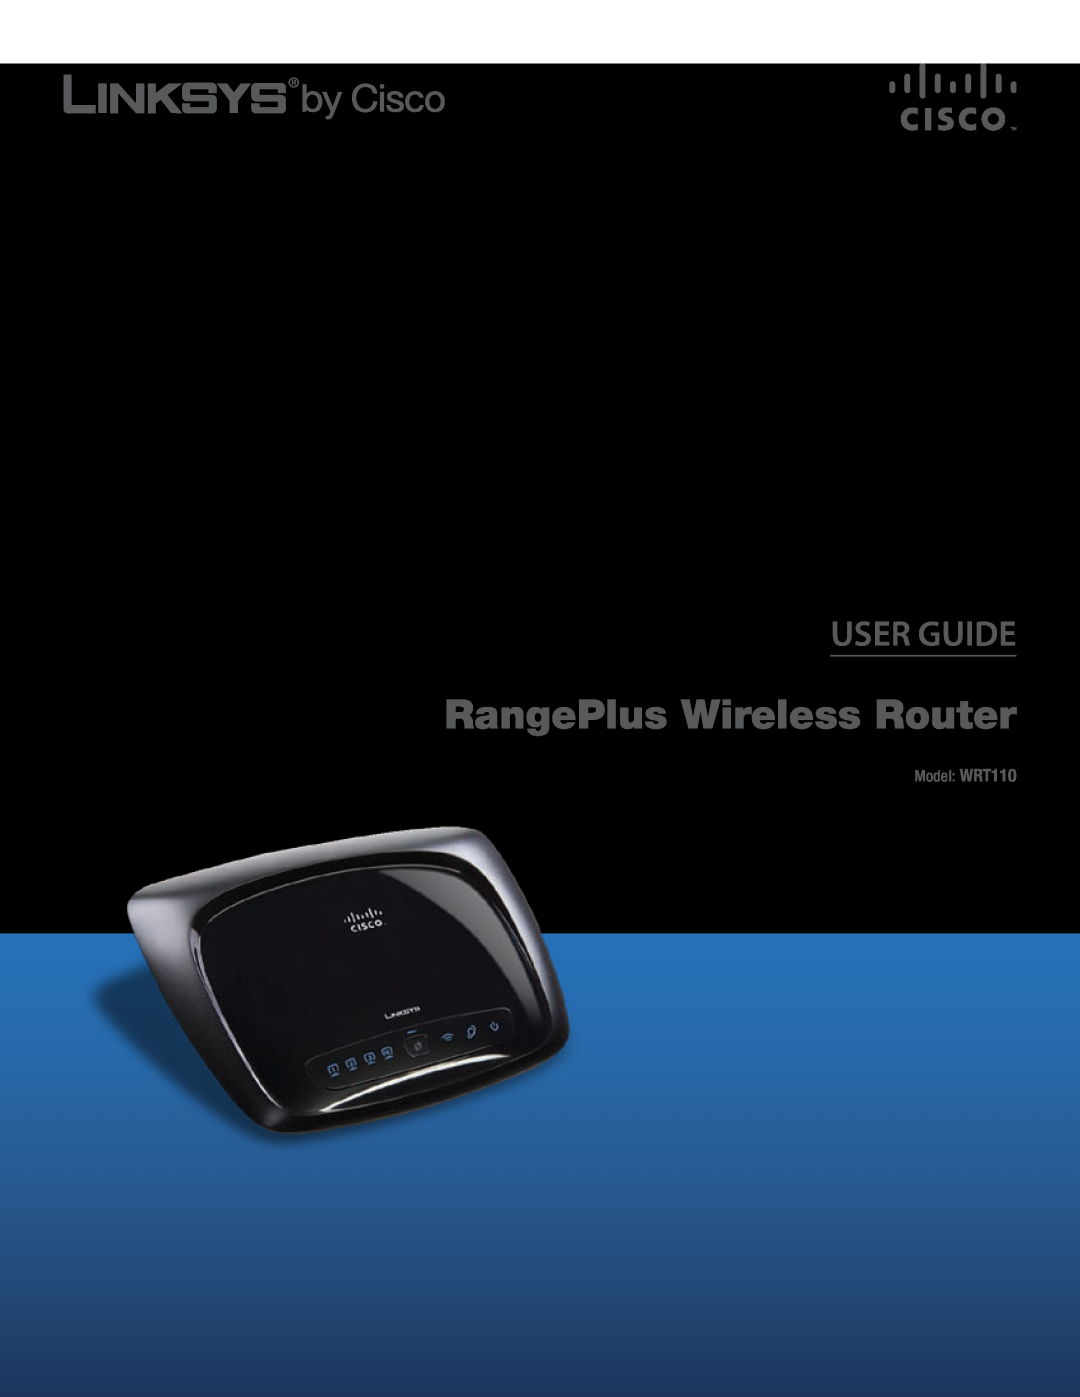 Cisco Systems manual RangePlus Wireless Router, User Guide, Model WRT110 